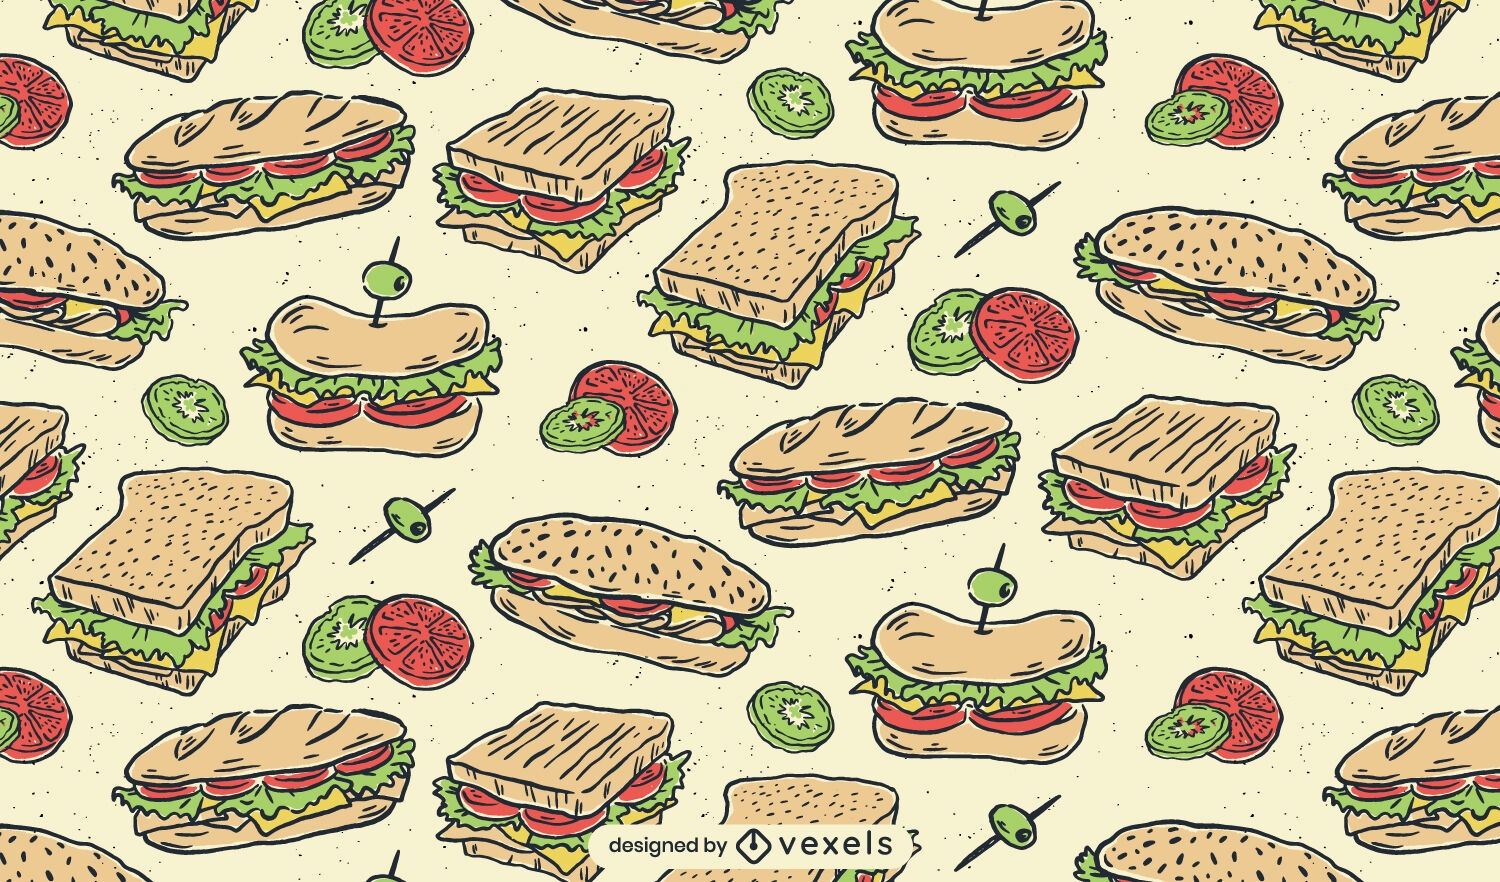 Diseño de patrón de sándwiches